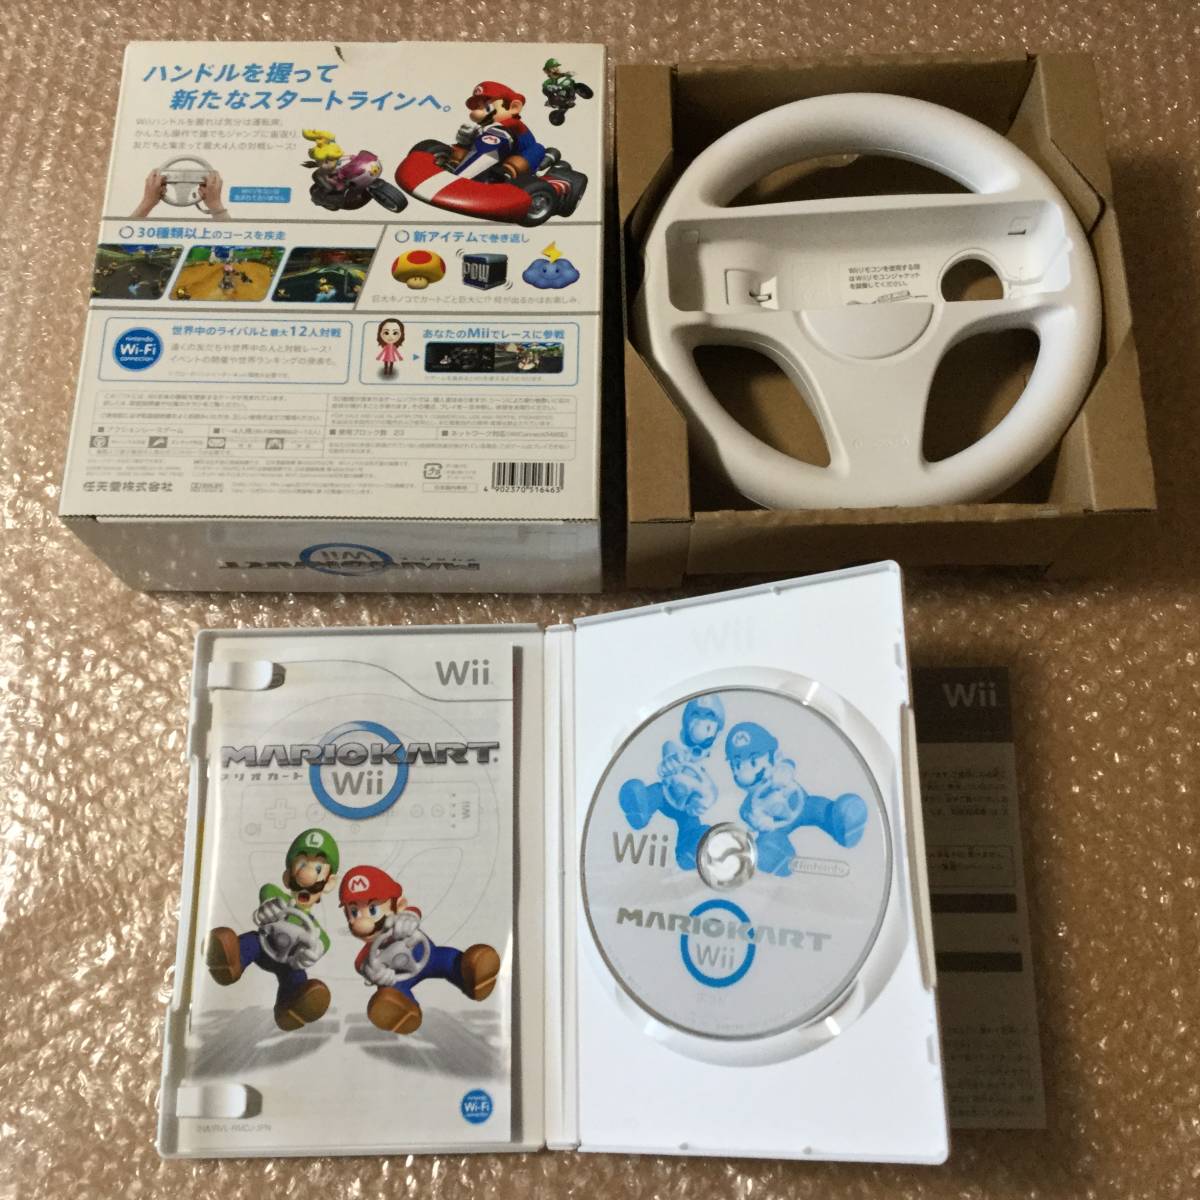 Wiiソフト「 マリオカートwii 」＋ Wii ハンドル シロ 2個 セット